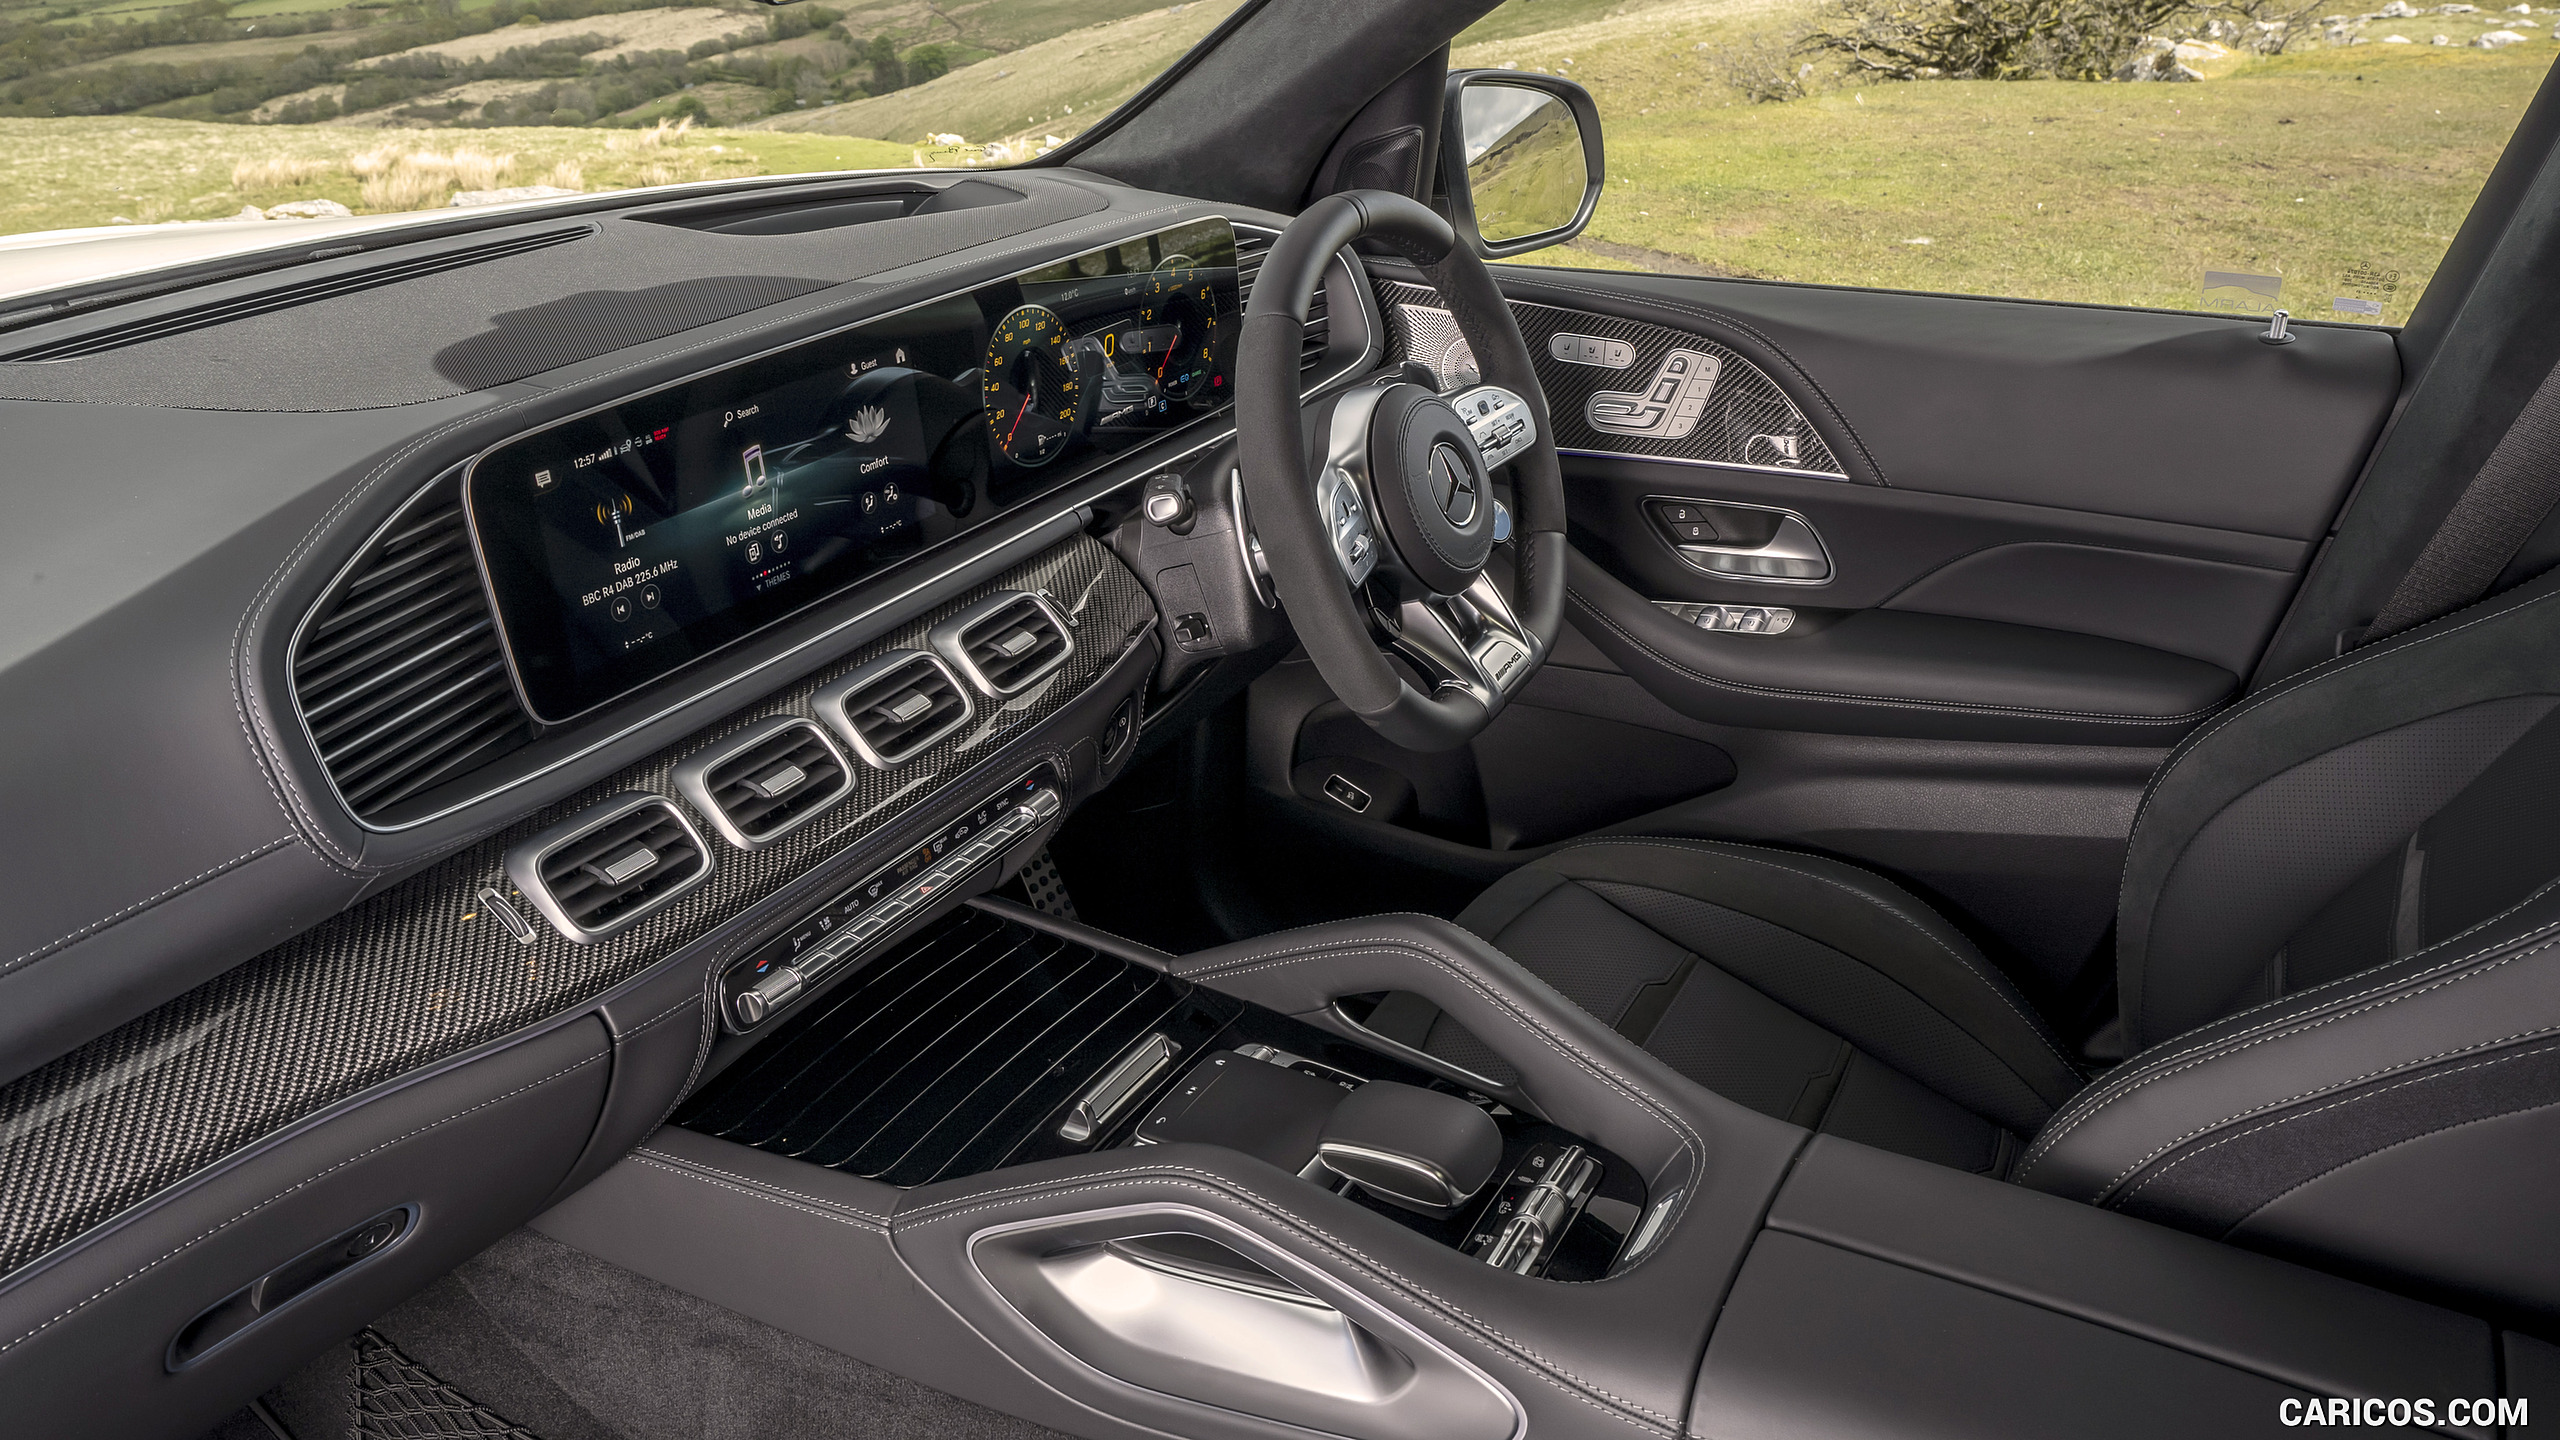 2021 Mercedes-AMG GLE 63 S 4MATIC (UK-Spec) - Interior, #160 of 187